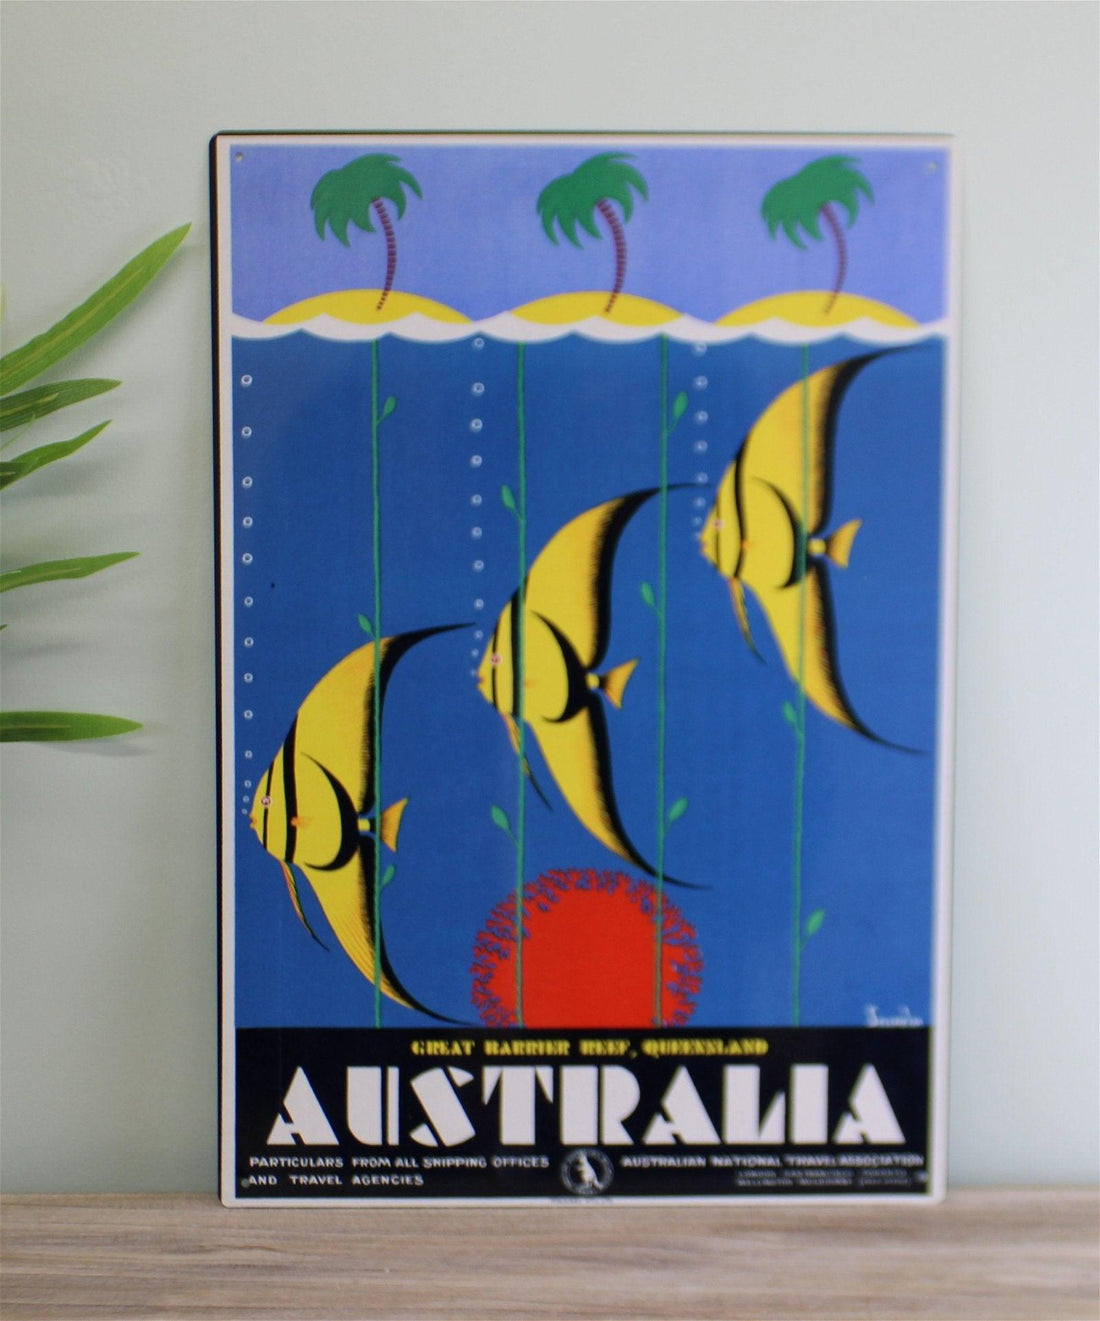 Vintage Metal Sign - Retro Advertising - Australia Fish - £27.99 - Retro Advertising 